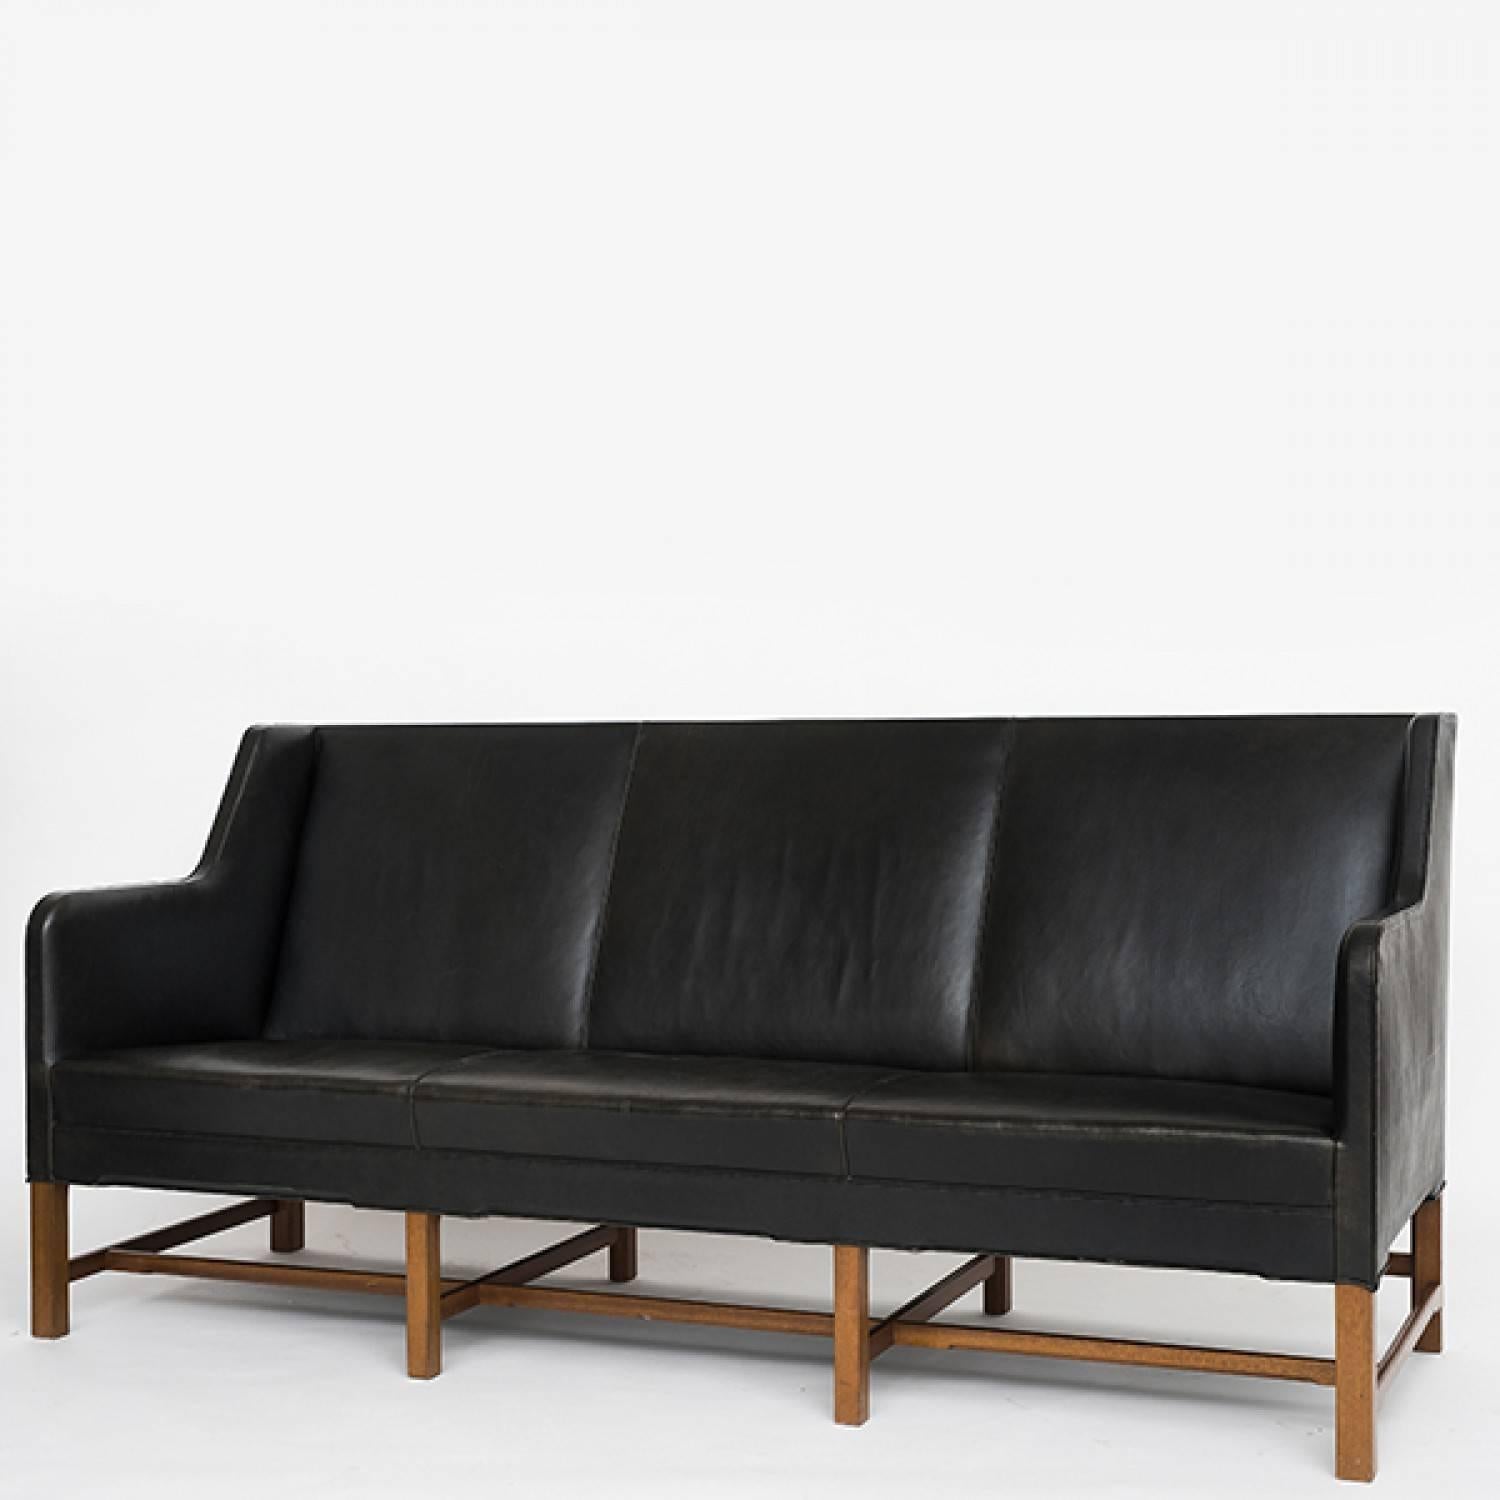 Kaare Klint sofa with original black leather and legs in mahogany. Maker Rud Rasmussen.